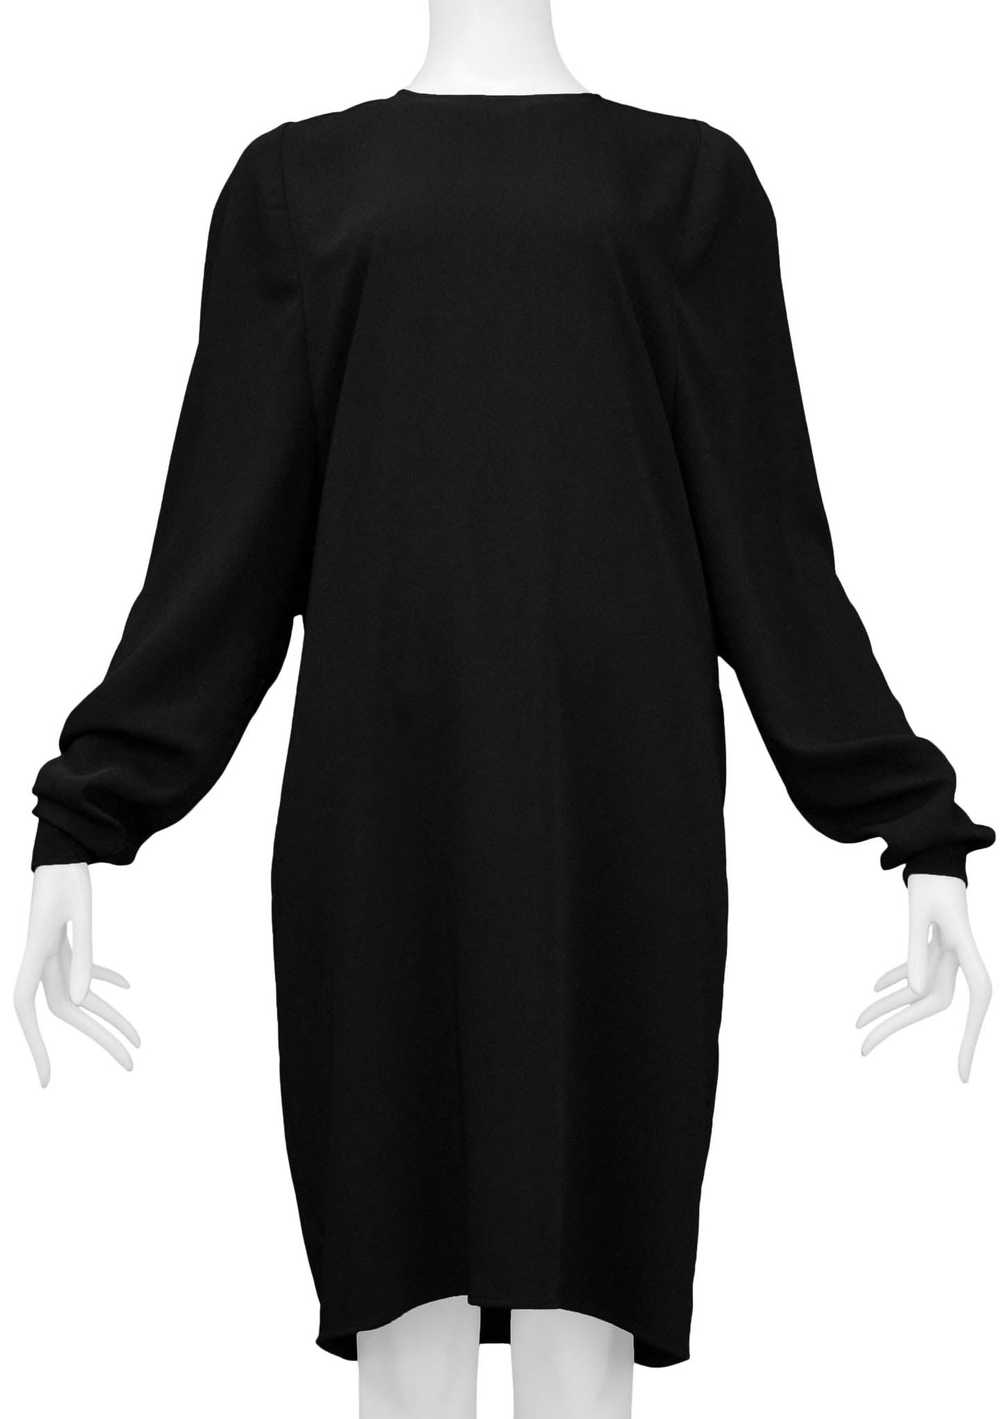 MARGIELA BLACK DRESS WITH LONG DOLMAN SLEEVES - image 5